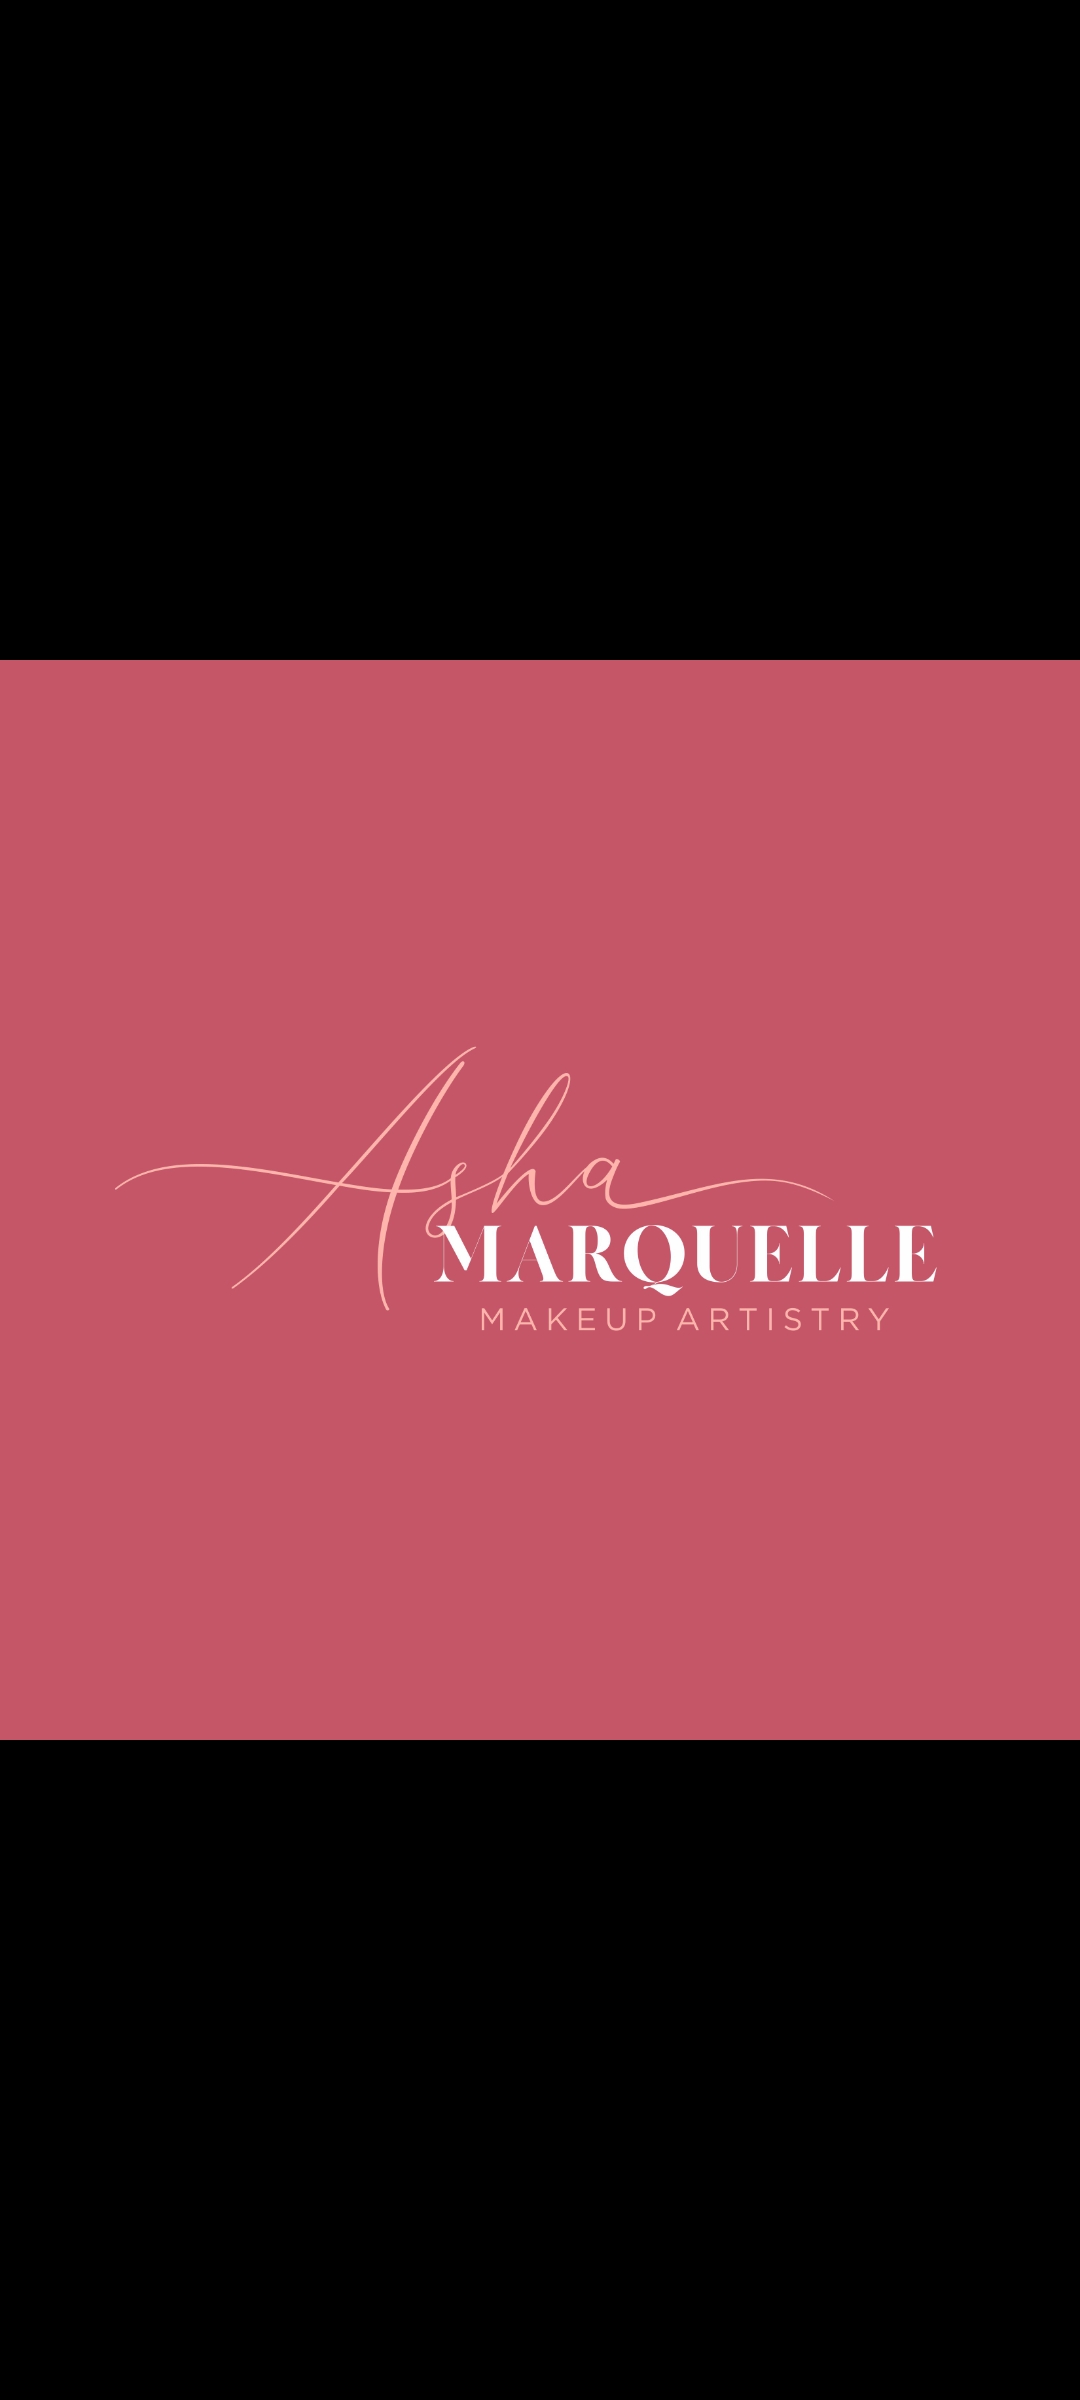 Asha MarQuelle Makeup Artistry-logo.jpg